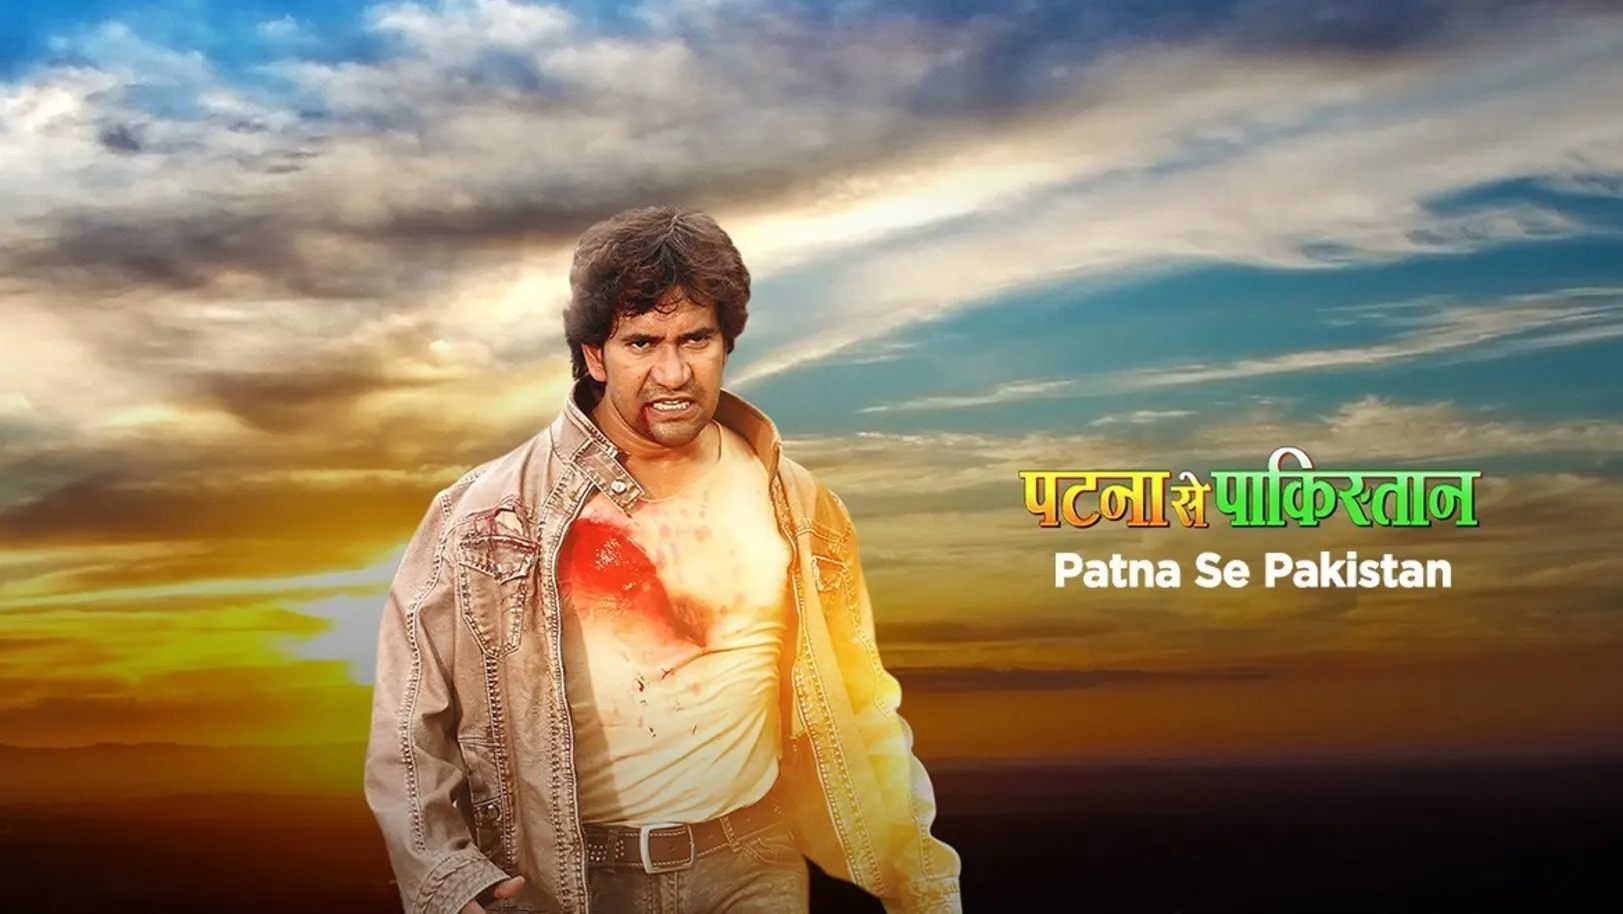 Patna Se Pakistan Movie